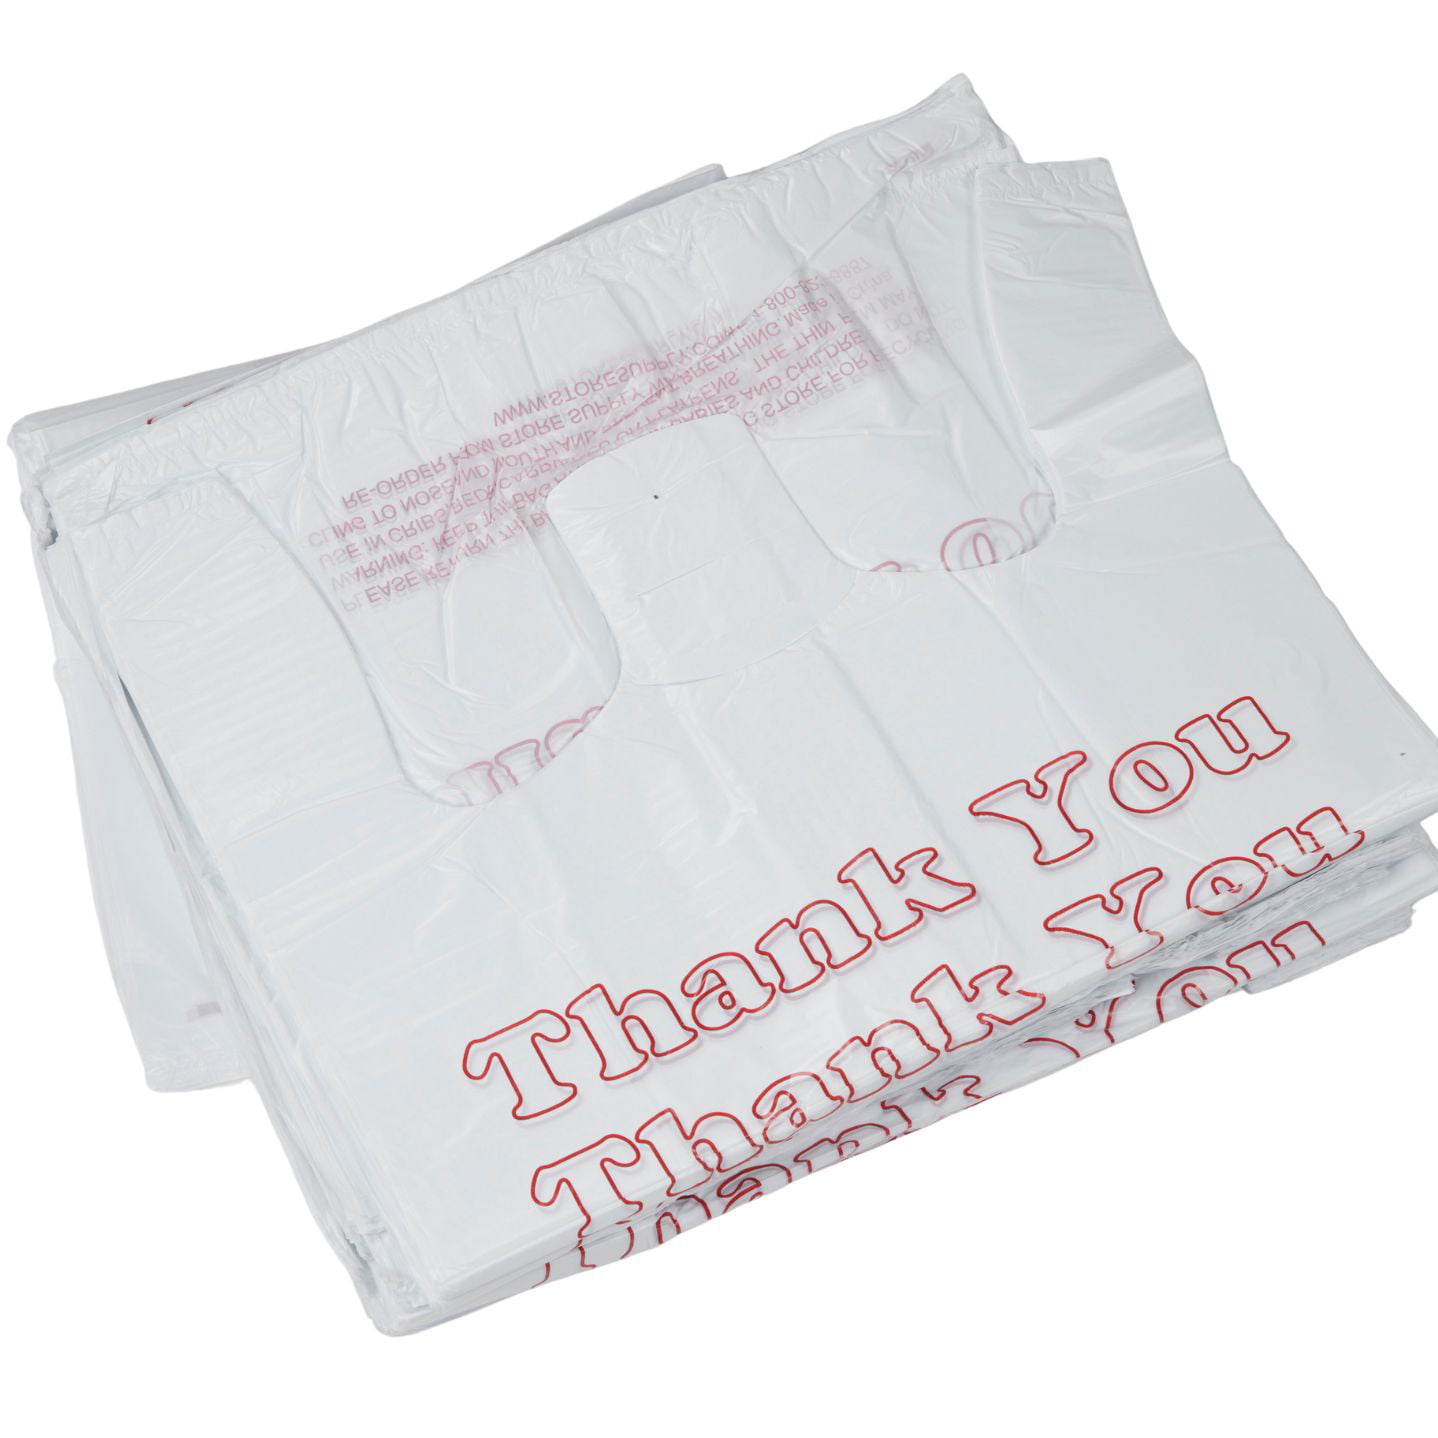 Box of Kohl's Large Gray T-Shirt bags, Plastic Bags - Quarter Price